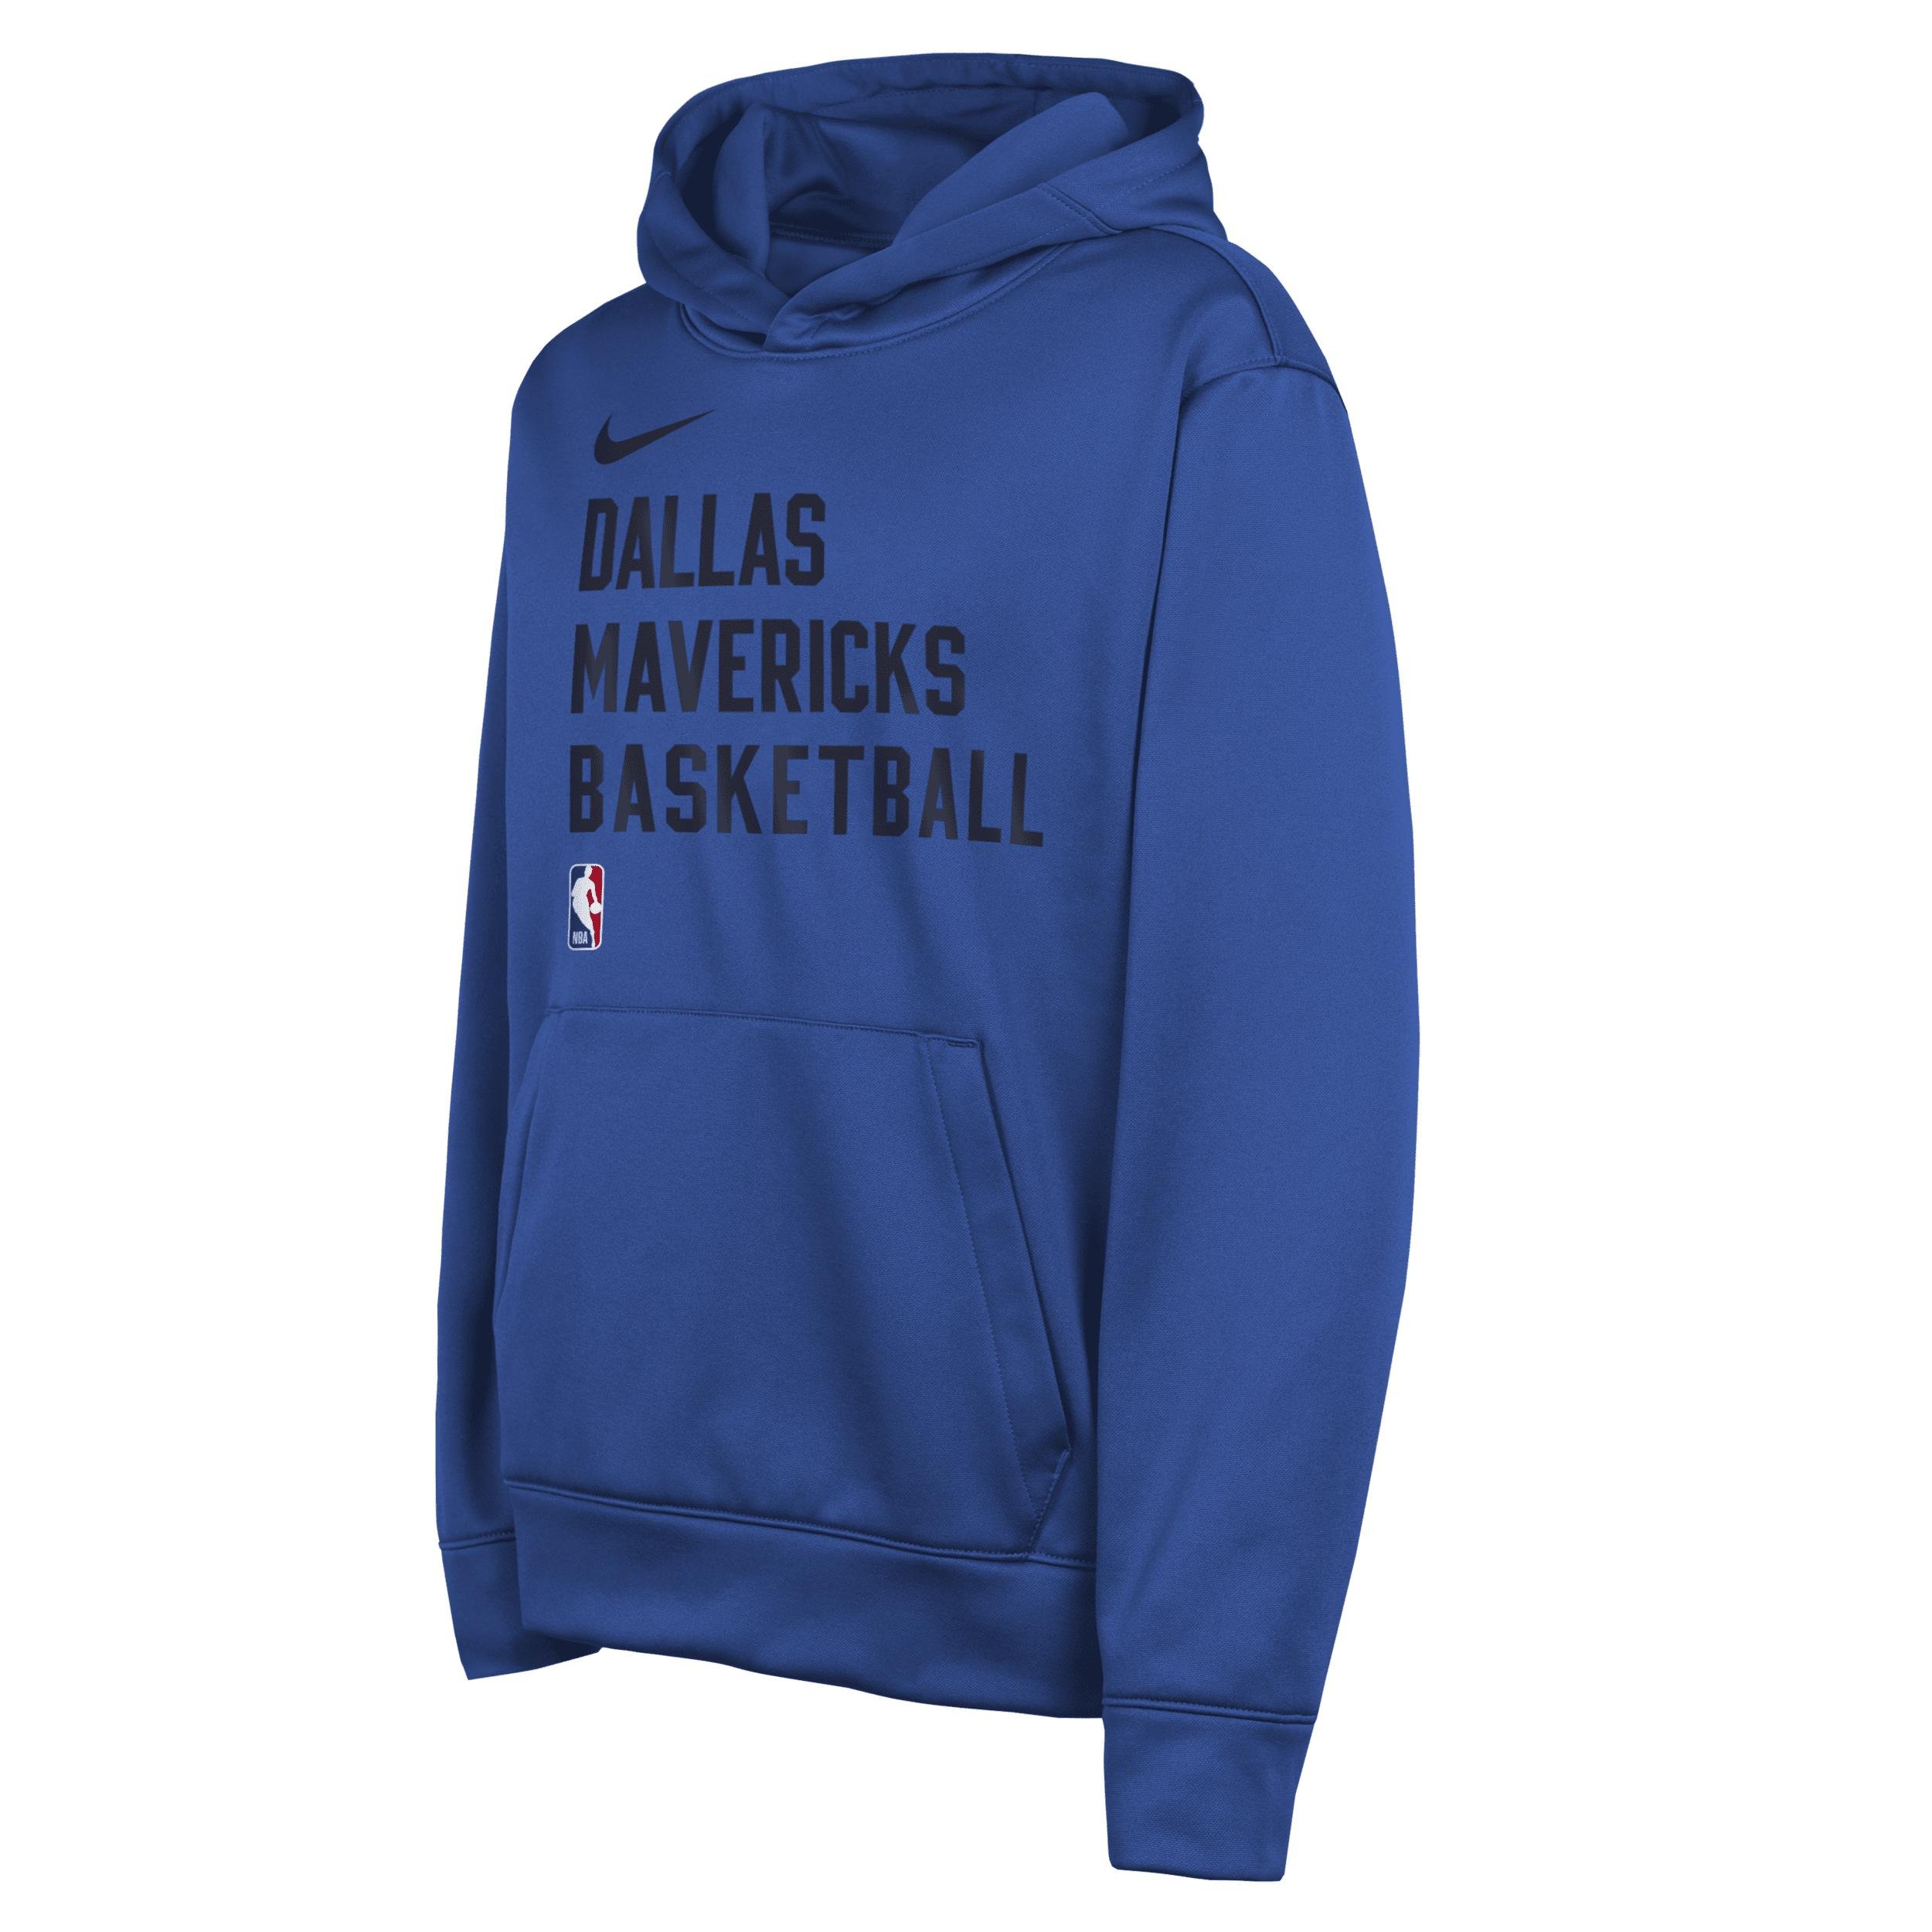 Dallas Mavericks Big Kids' Nike Dri-FIT NBA Pullover Hoodie by NIKE